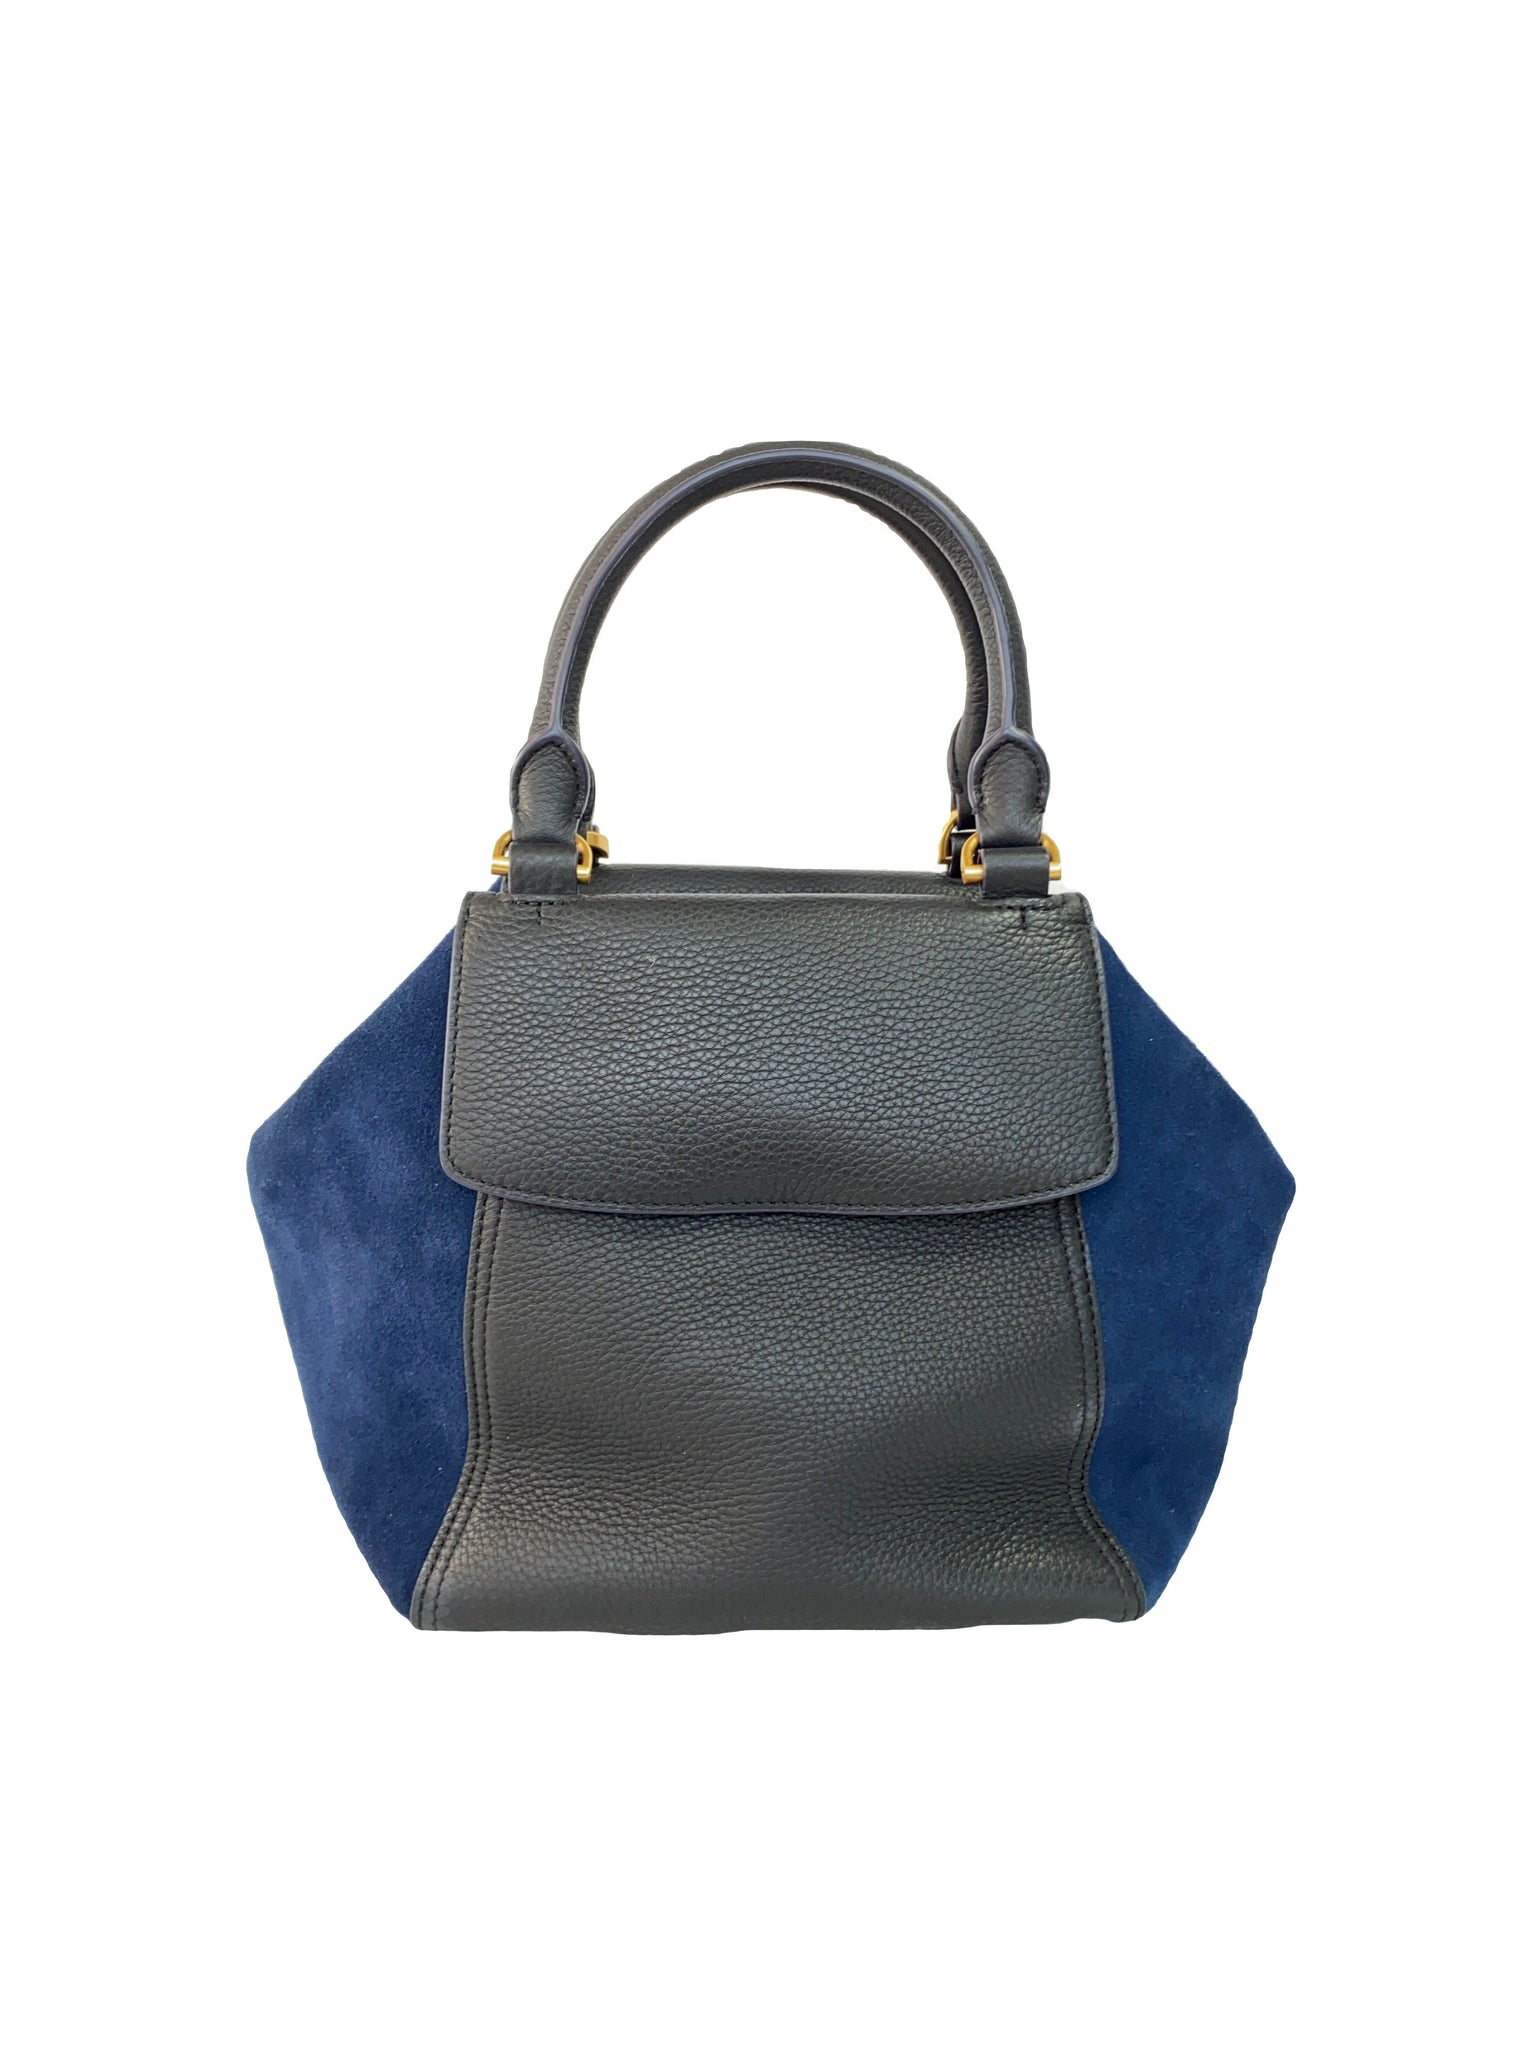 Tory Burch, Bags, Nwt Tory Burch Navy Blue Leather Tote Handbag